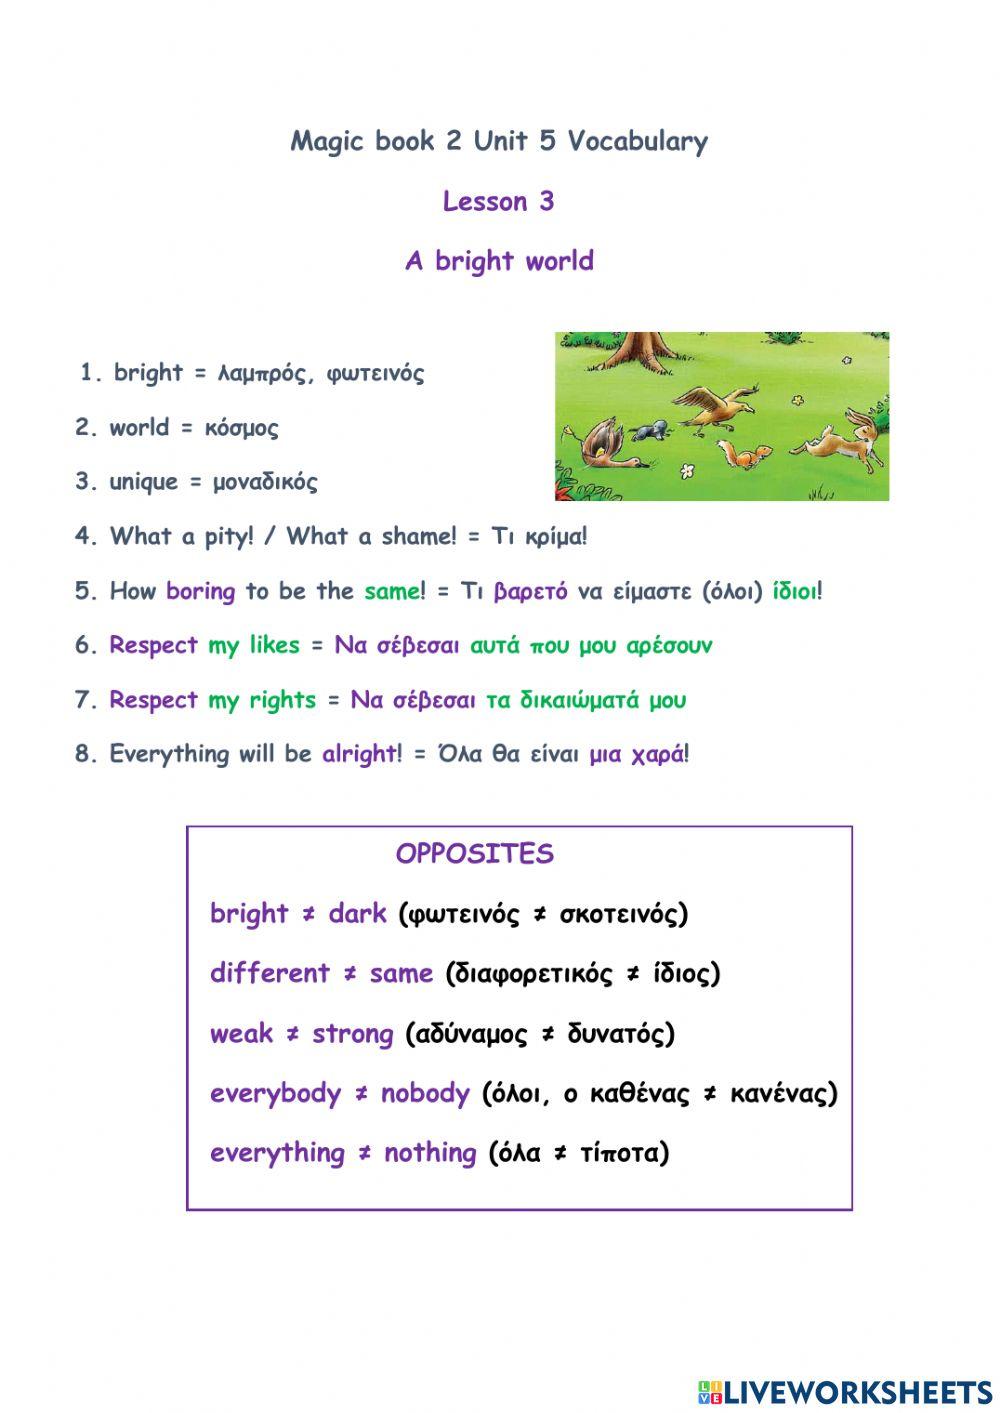 Magic book 2 U5 lesson 3 vocabulary